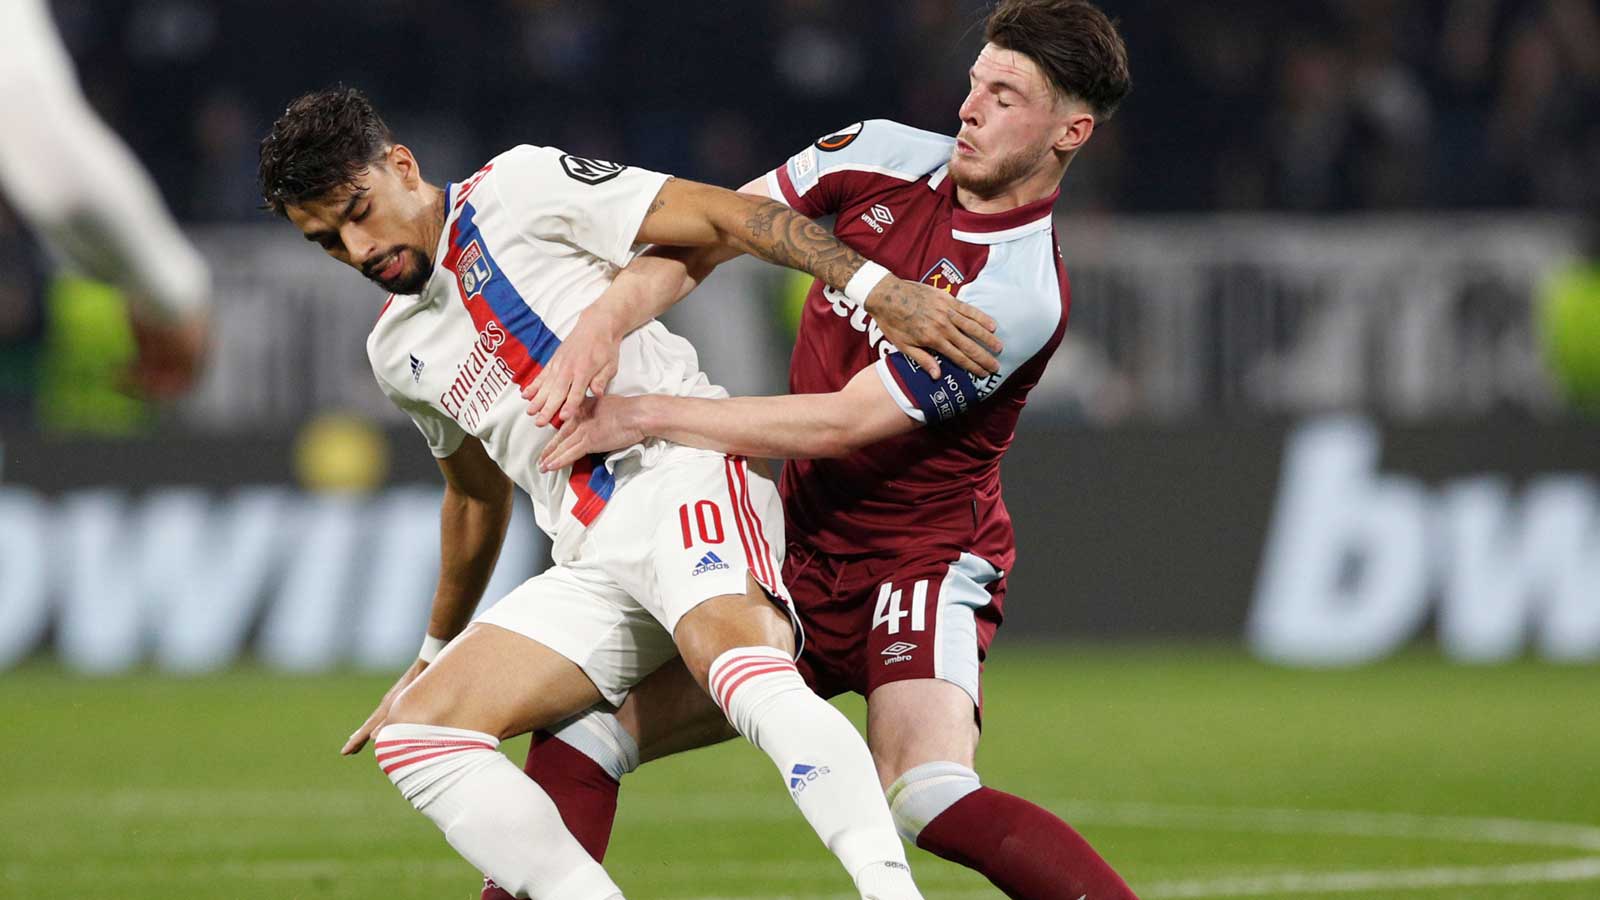 Lucas Paquetá battles with Declan Rice during the UEFA Europa League quarter-final last season